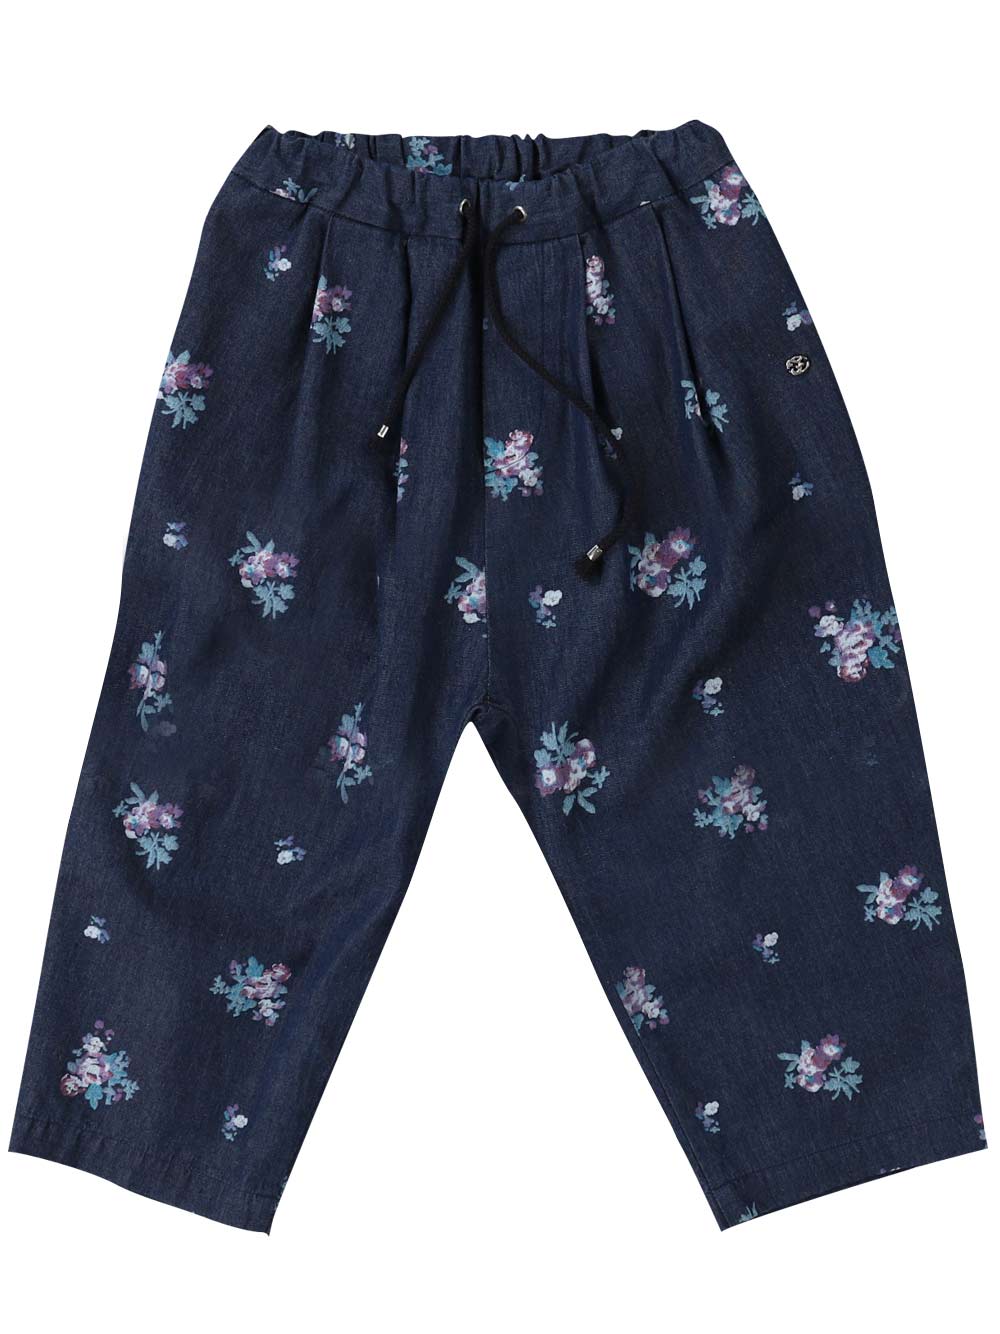 PREORDER: Navy Floral Pants